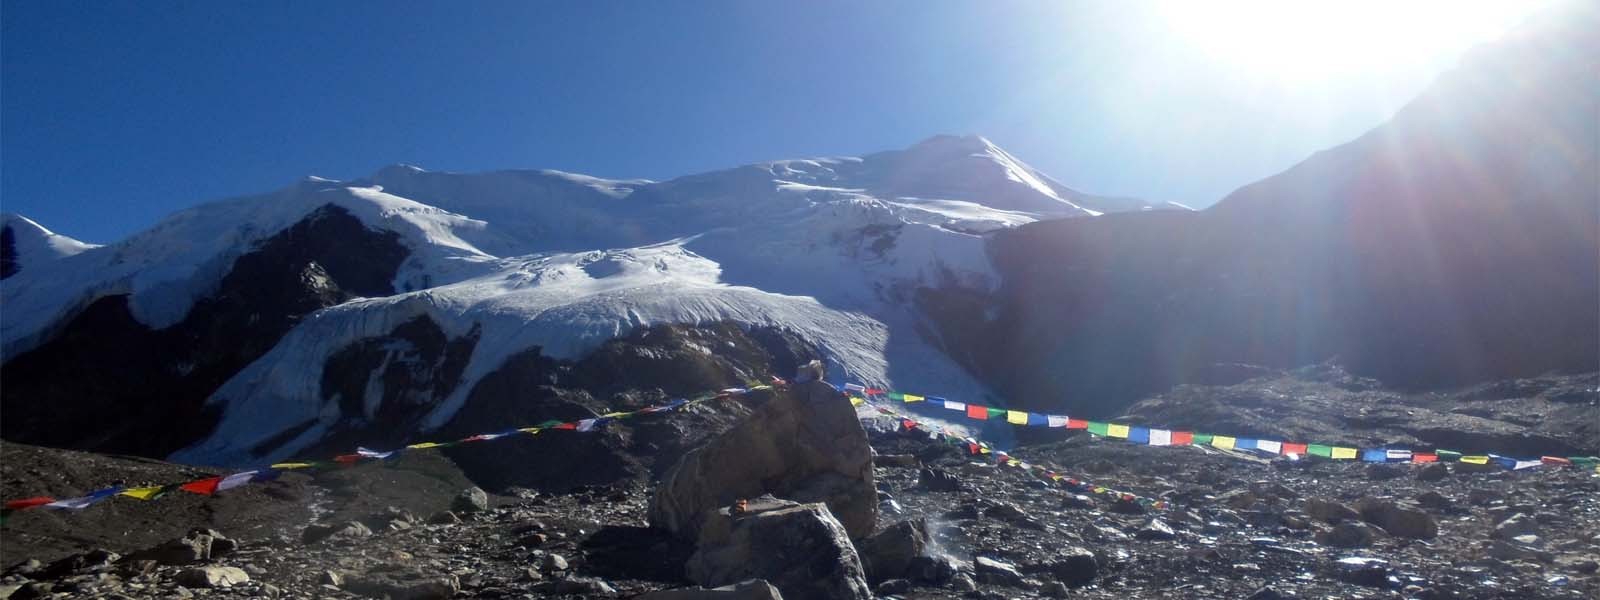 Mukot Himal Climbing